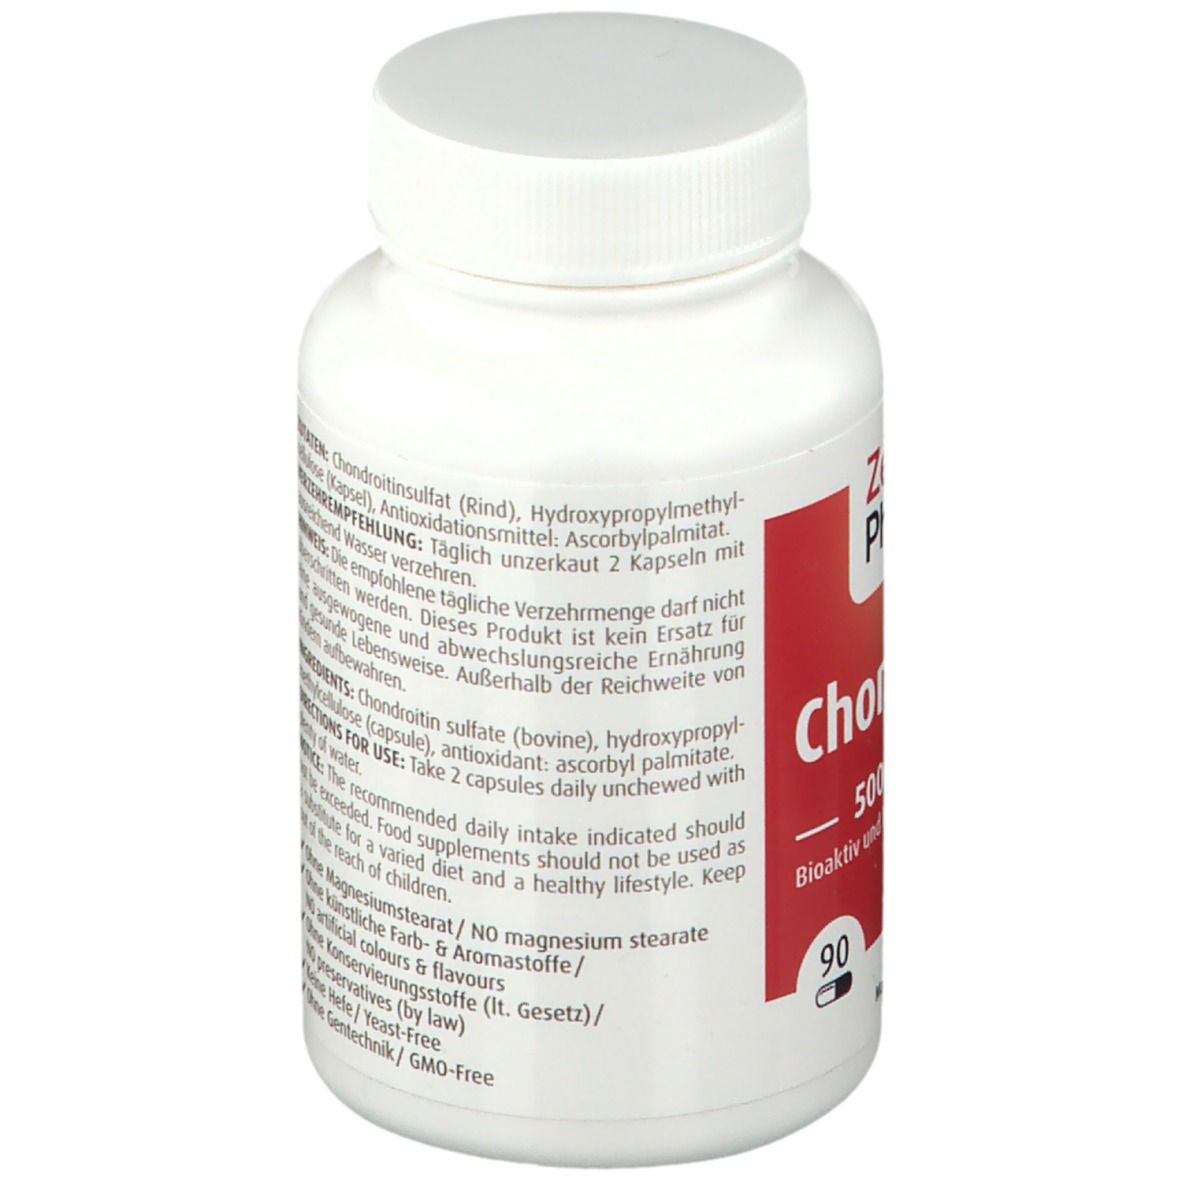 ZeinPharma® Chondroitin Kapseln 500 mg